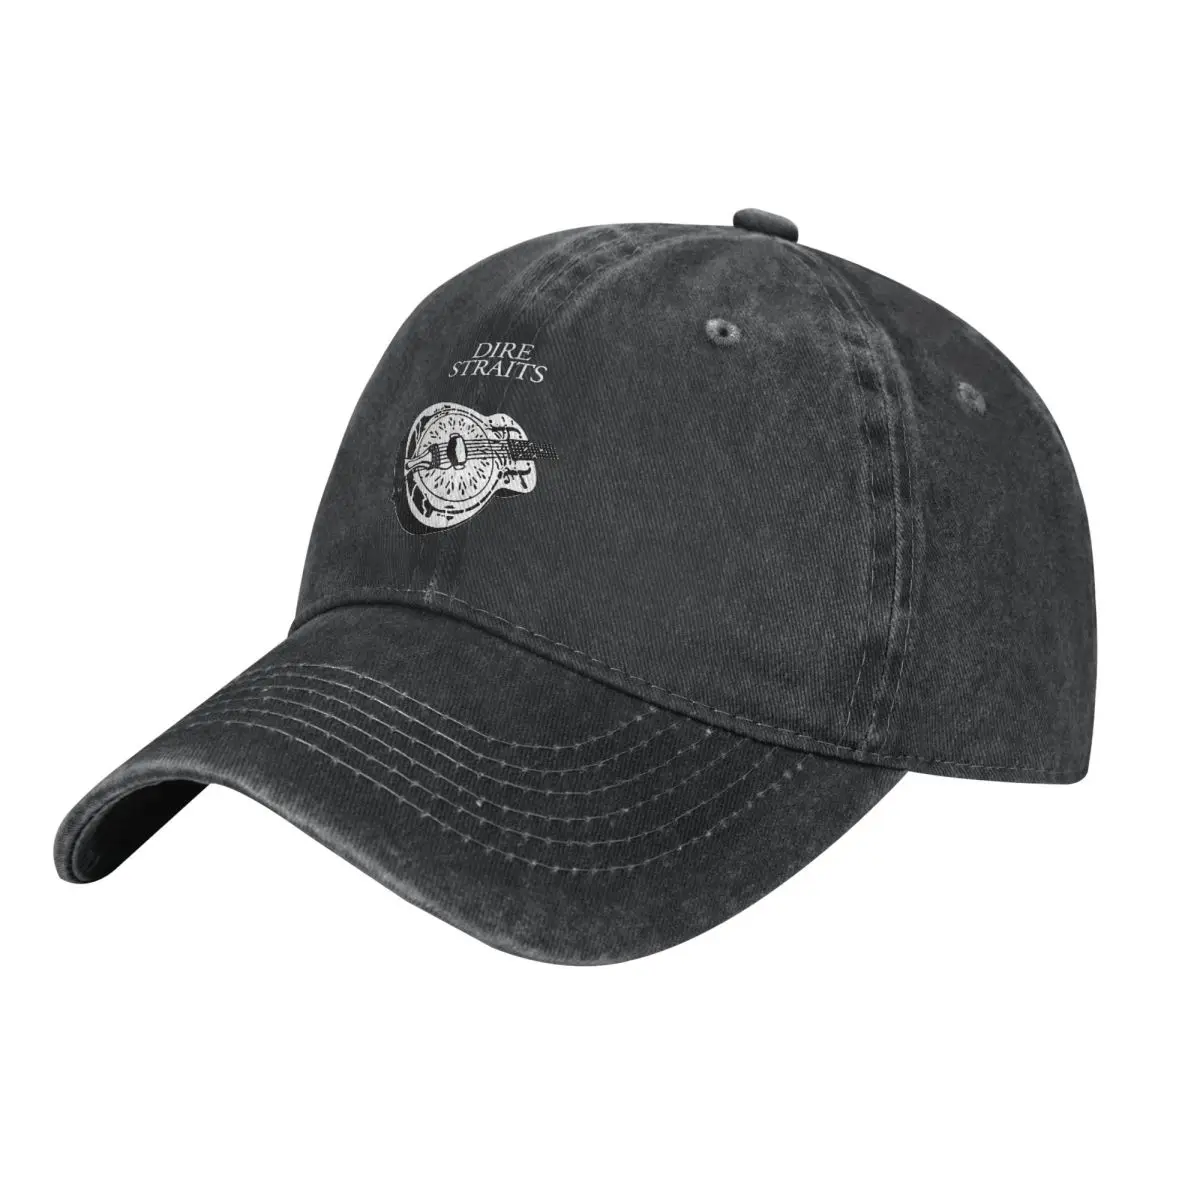 

Dire Straits Adjustable Baseball Cap Sports Cowboy Hat Trucker Cap Dad Hat Classic Retro Vintage for Men Women